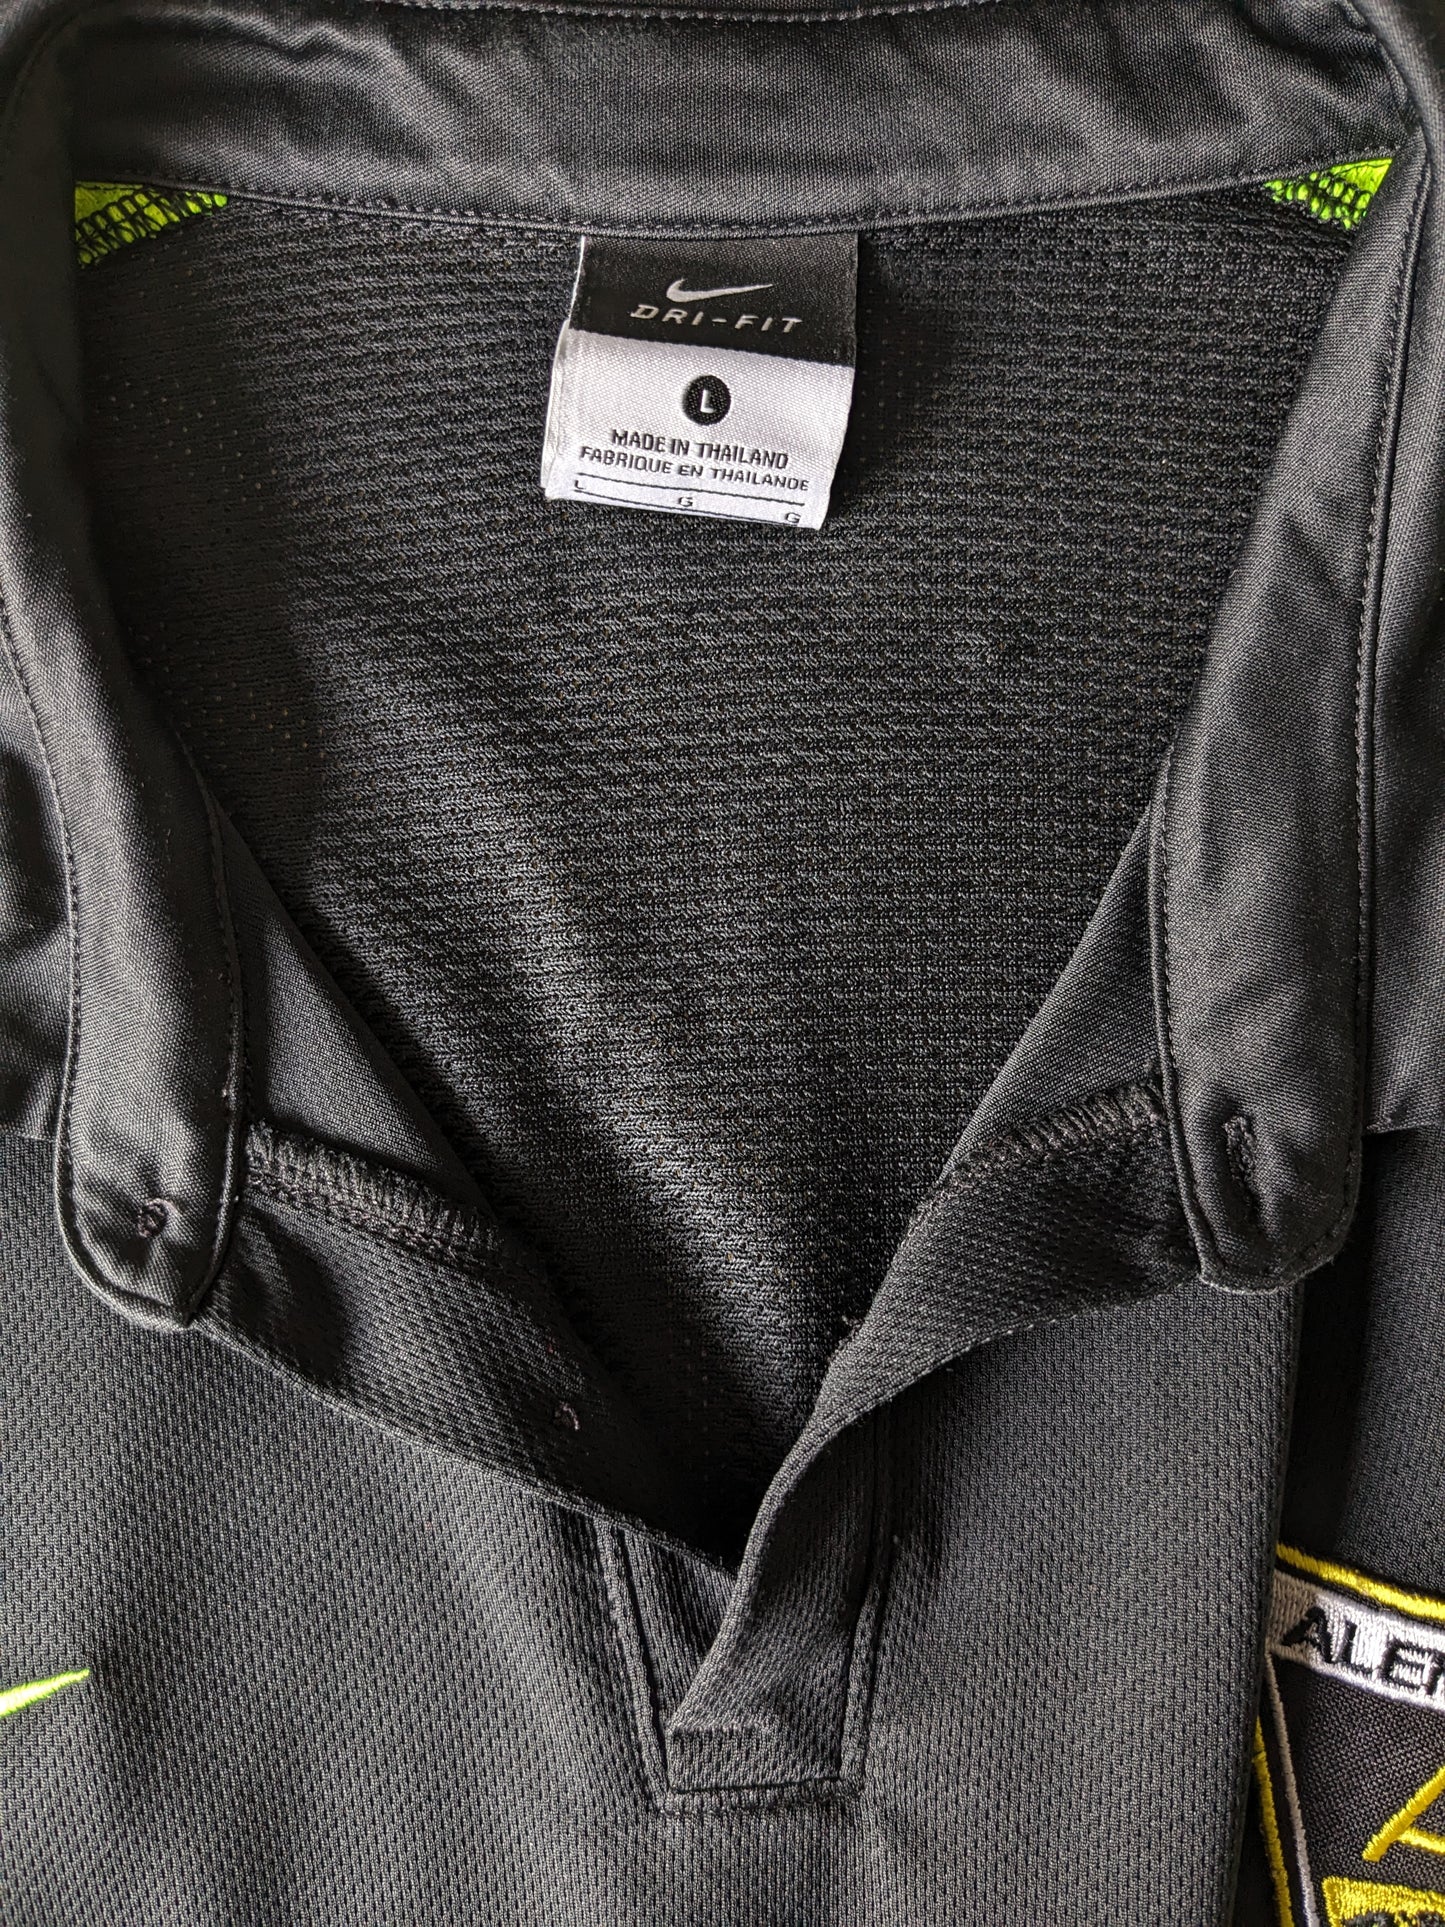 Nike Alemannia Sport Polo. Black green colored. Size L.